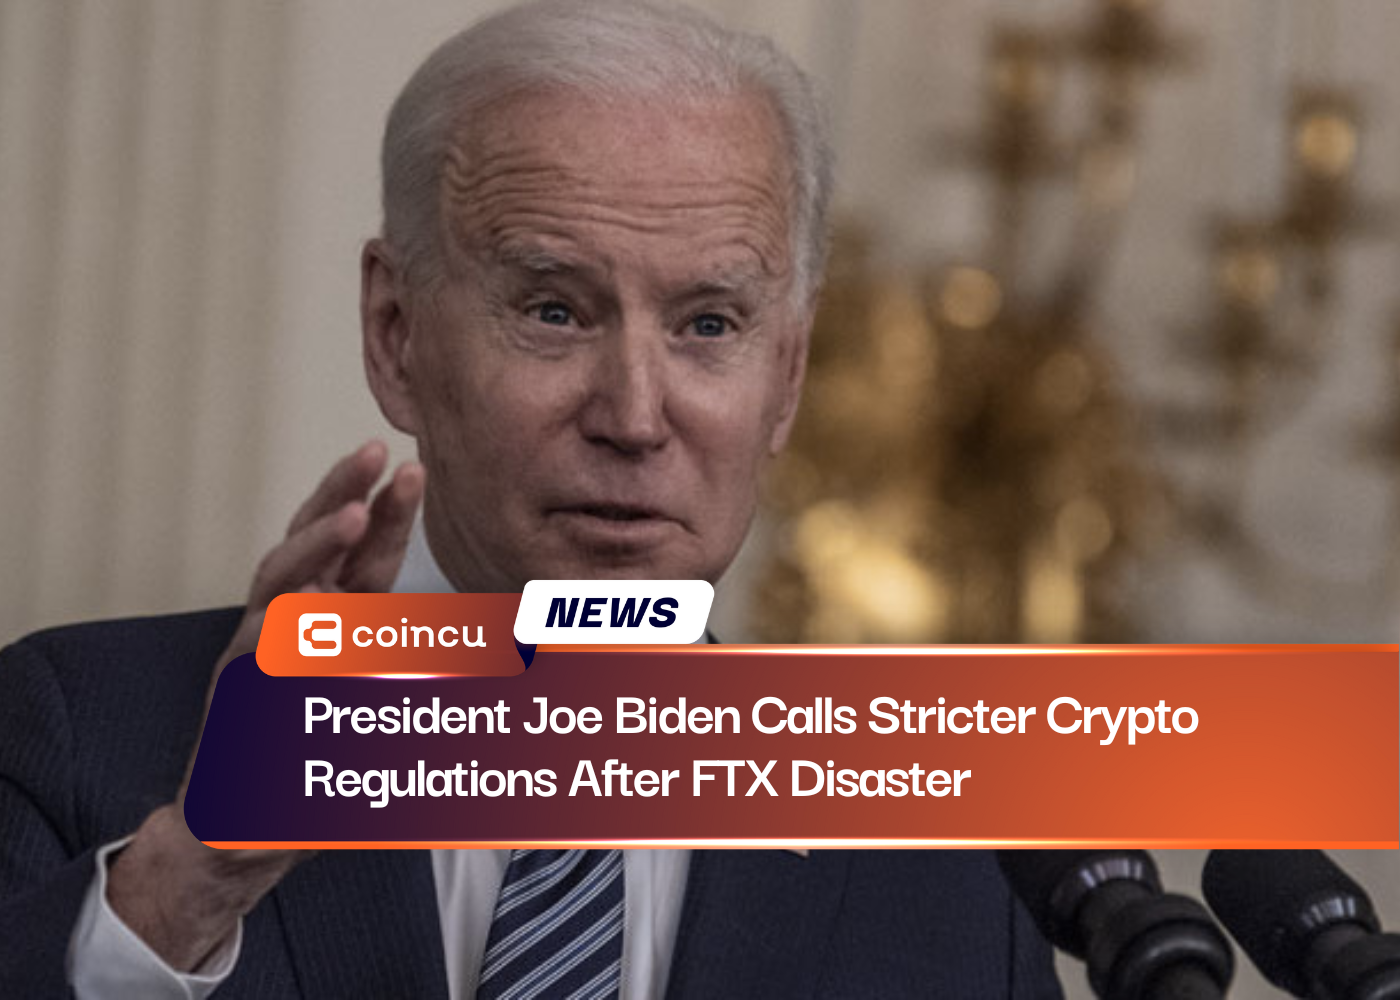 President Joe Biden Calls Stricter Crypto Regulations After FTX Disaster